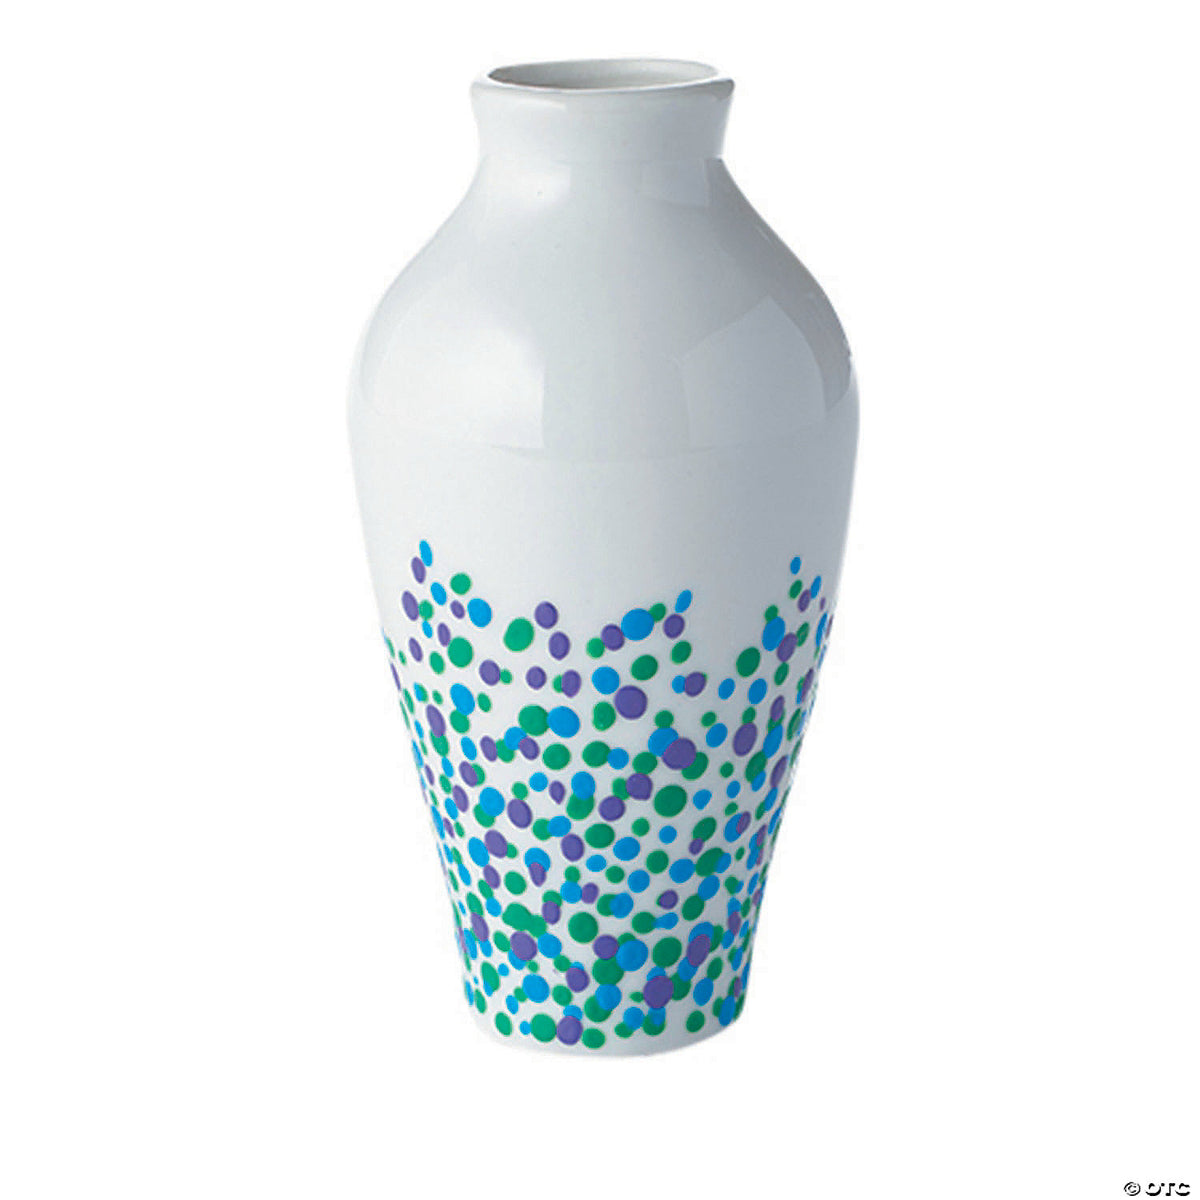 Paint Your Own Porcelain Vase Cover